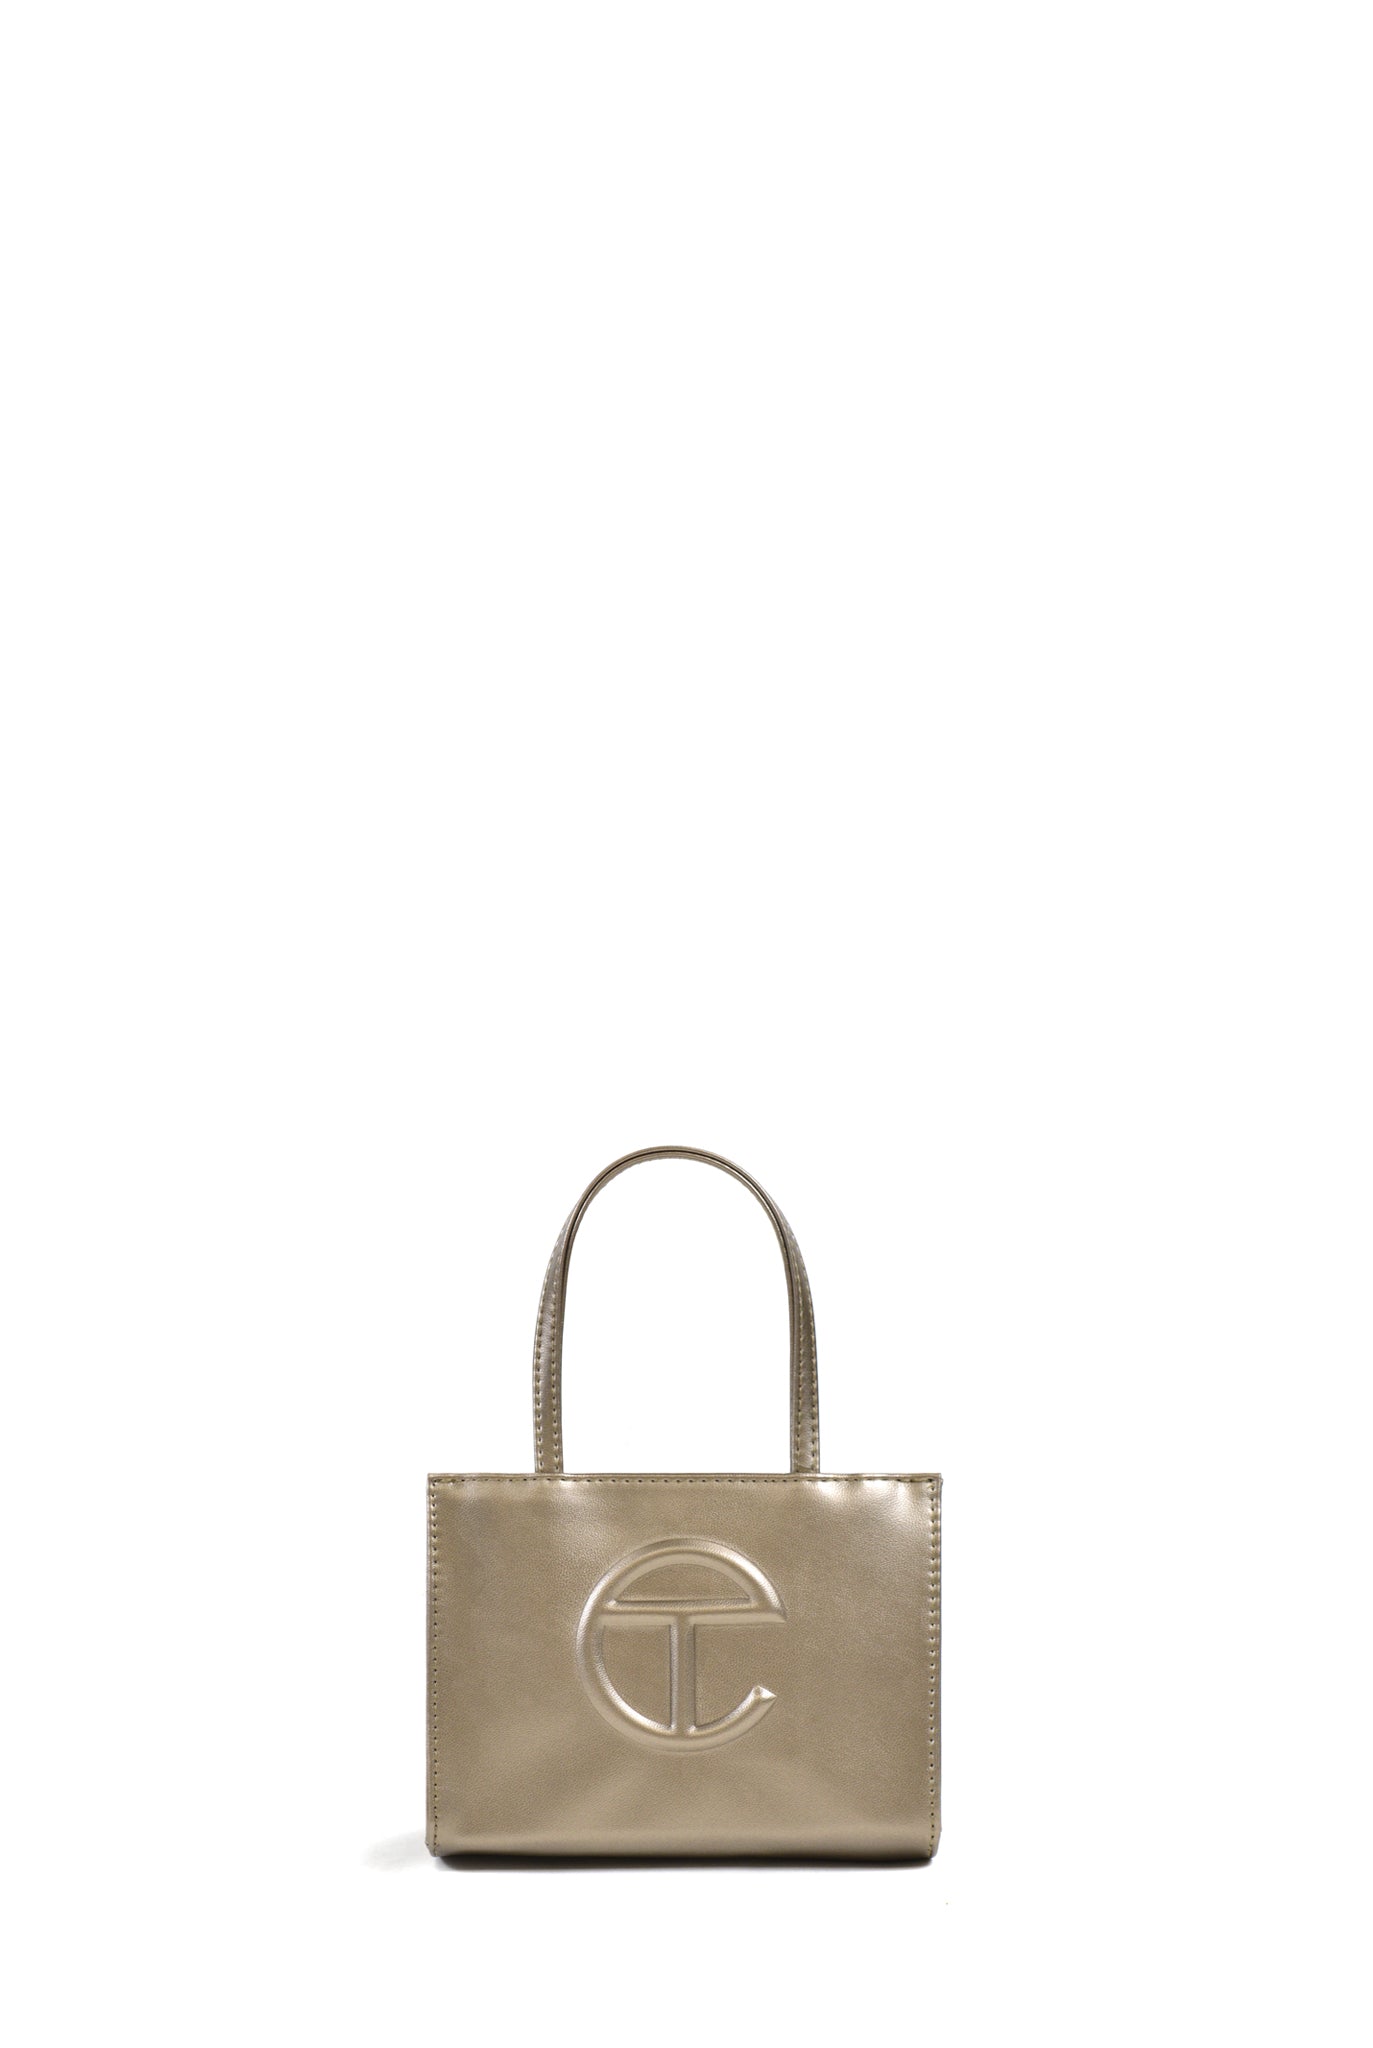 Telfar Small Shopping Bag, Bronze